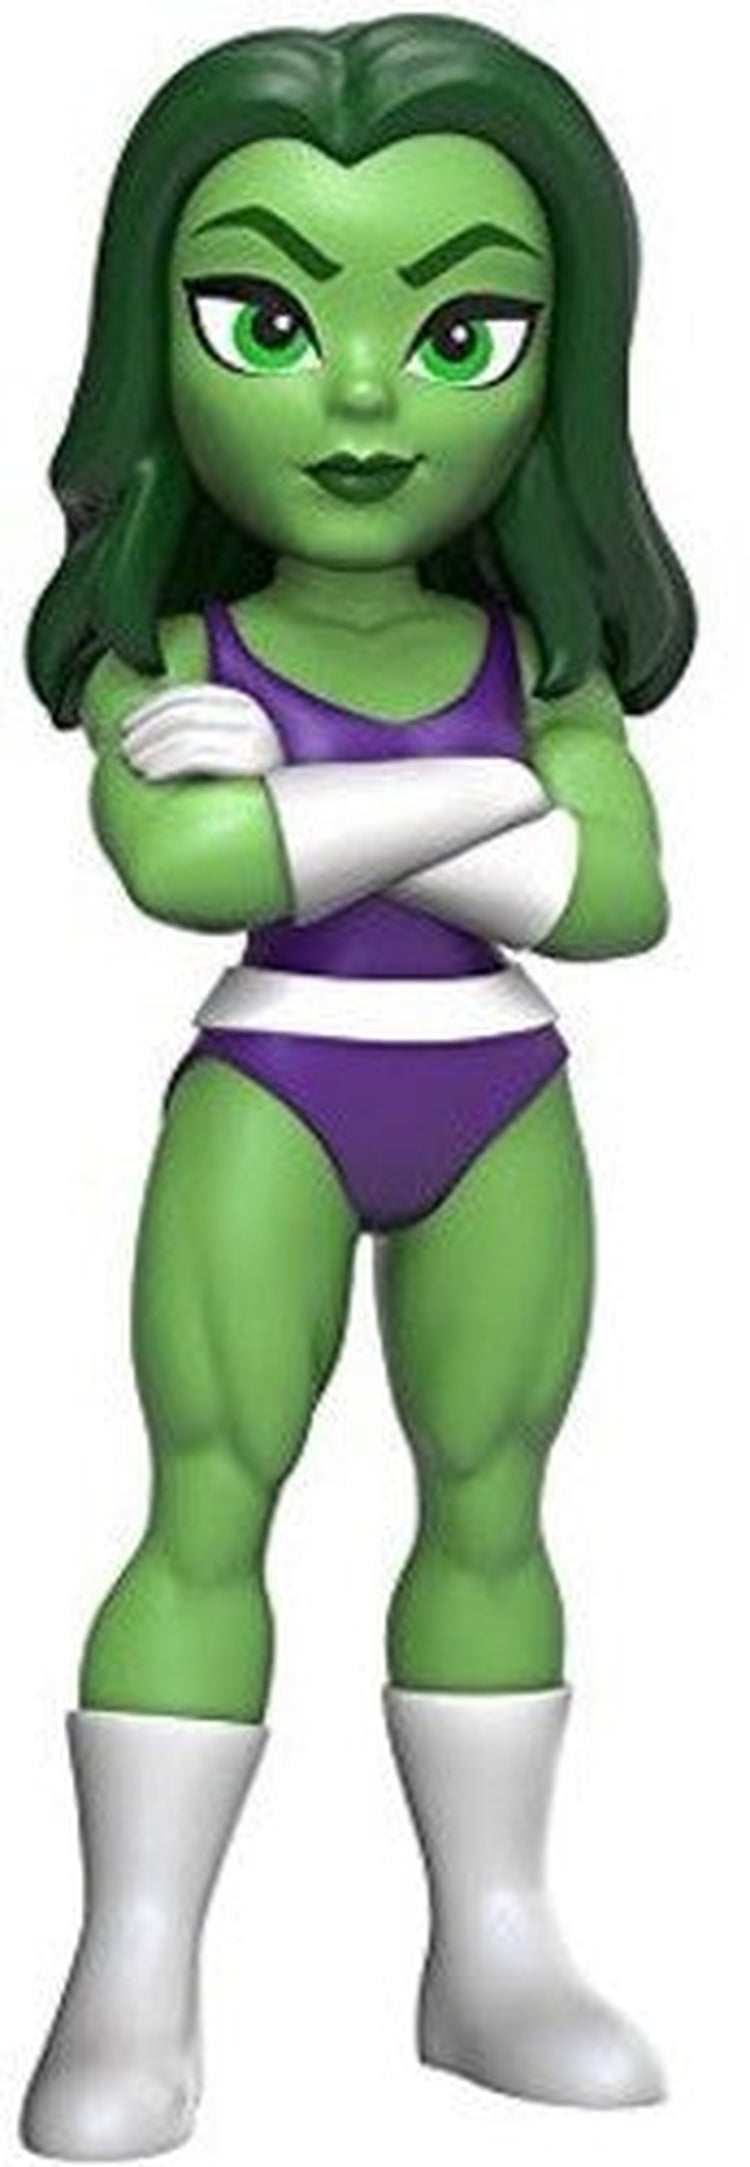 FUNKO ROCK CANDY: Marvel - She - Hulk